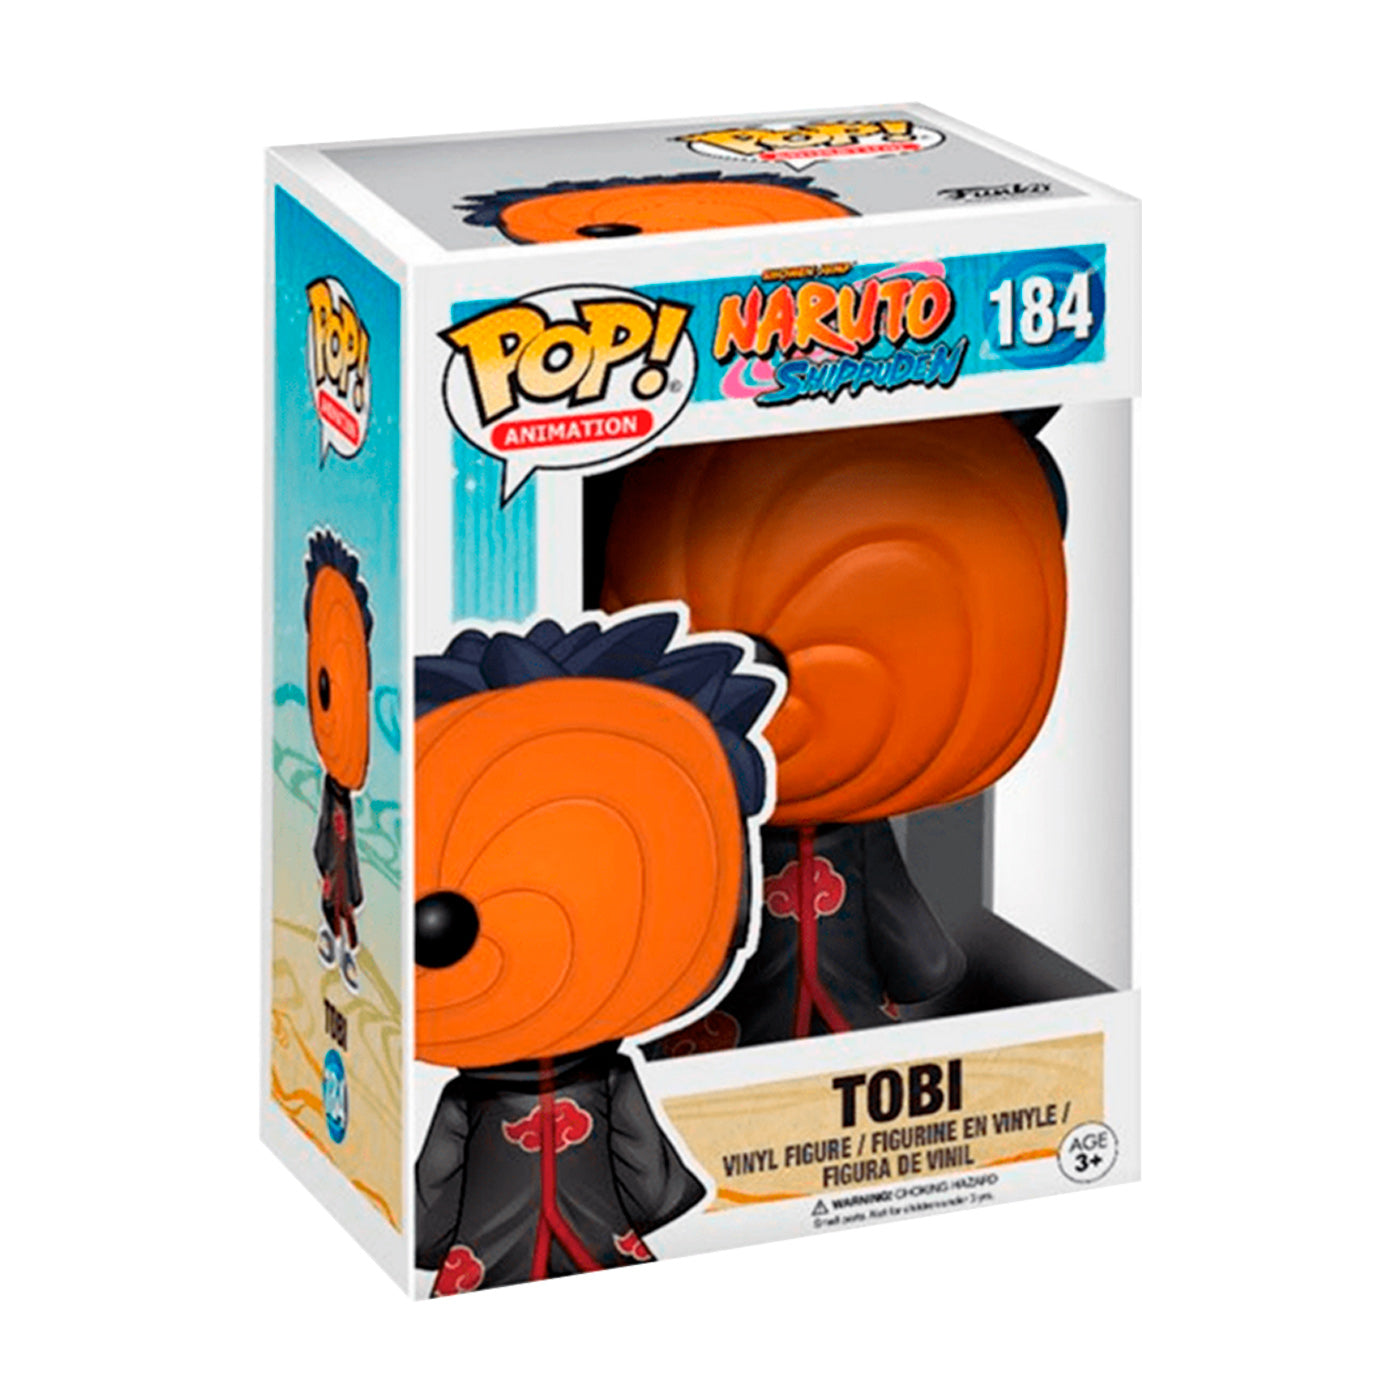 Funko Pop Animation: Tobi (184)